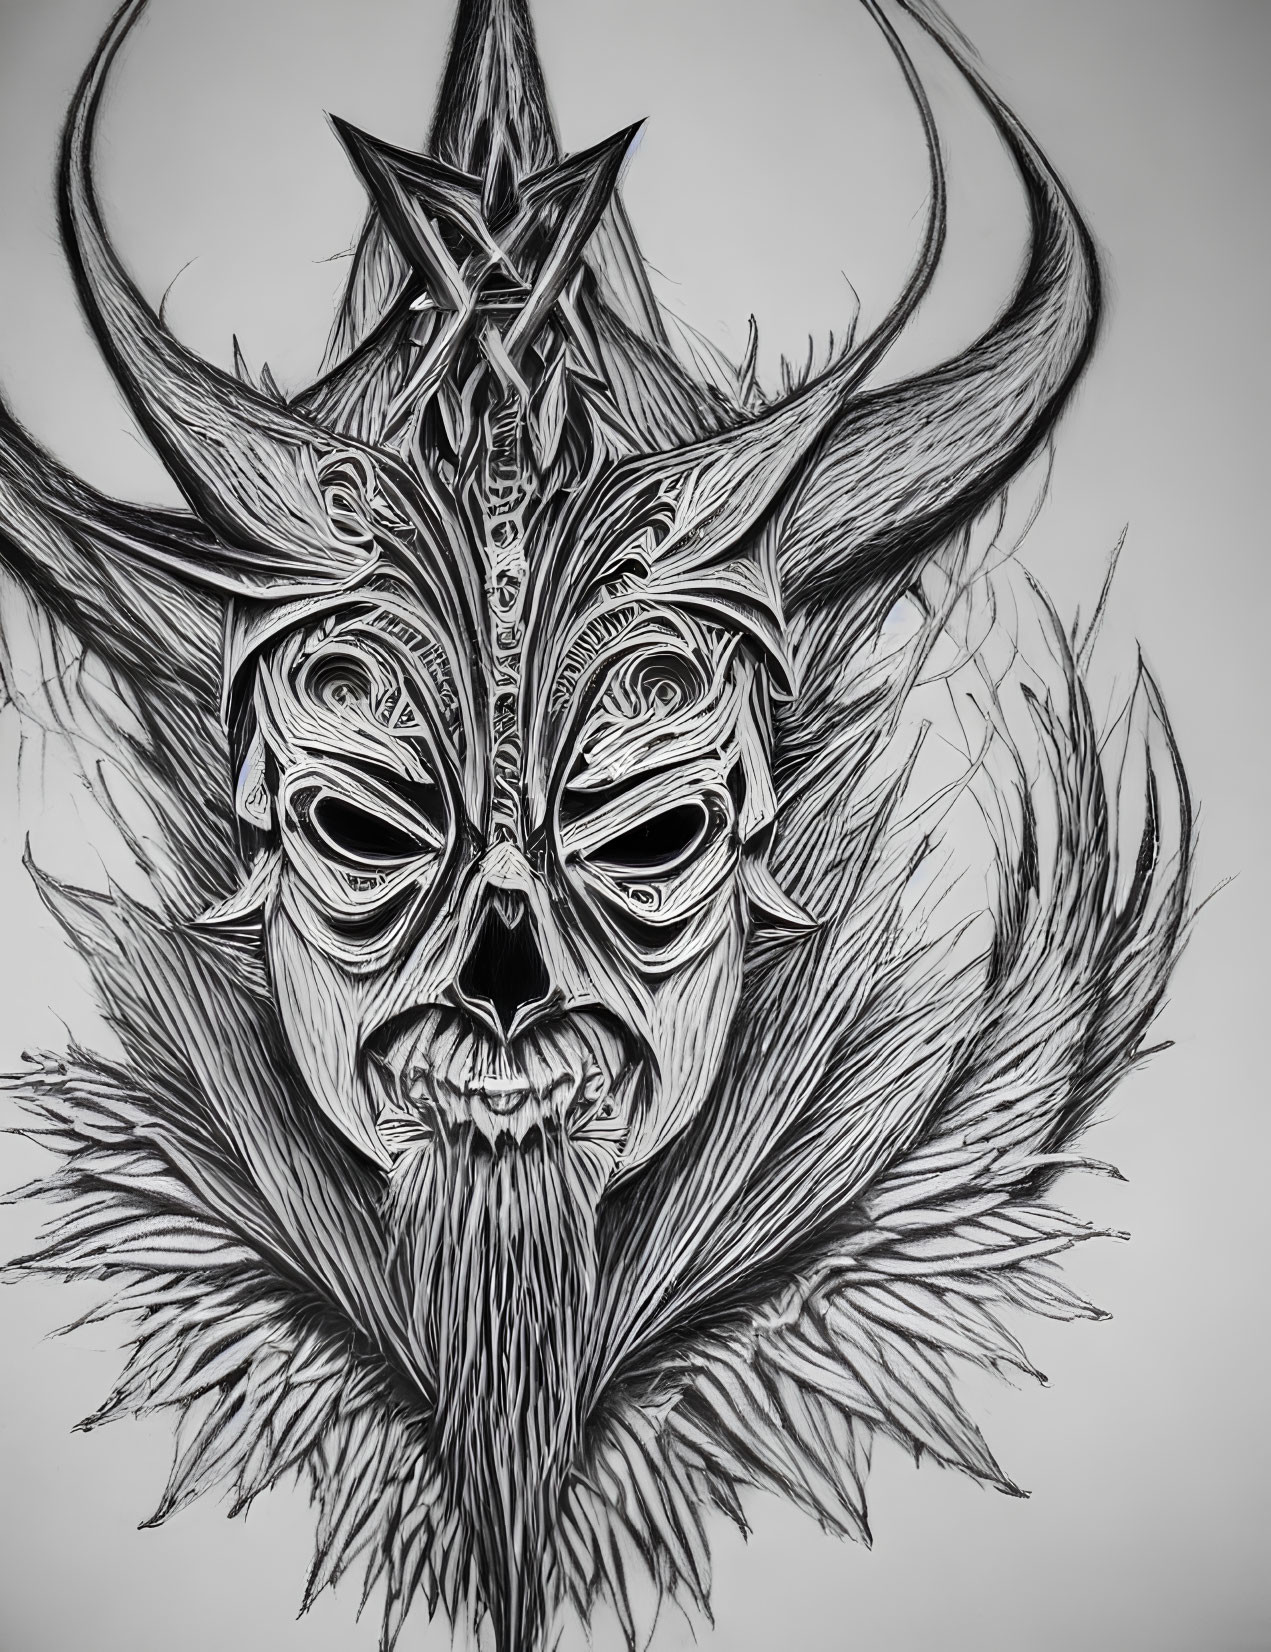 Monochrome illustration: Menacing figure with antlers, fur collar, pentagram.